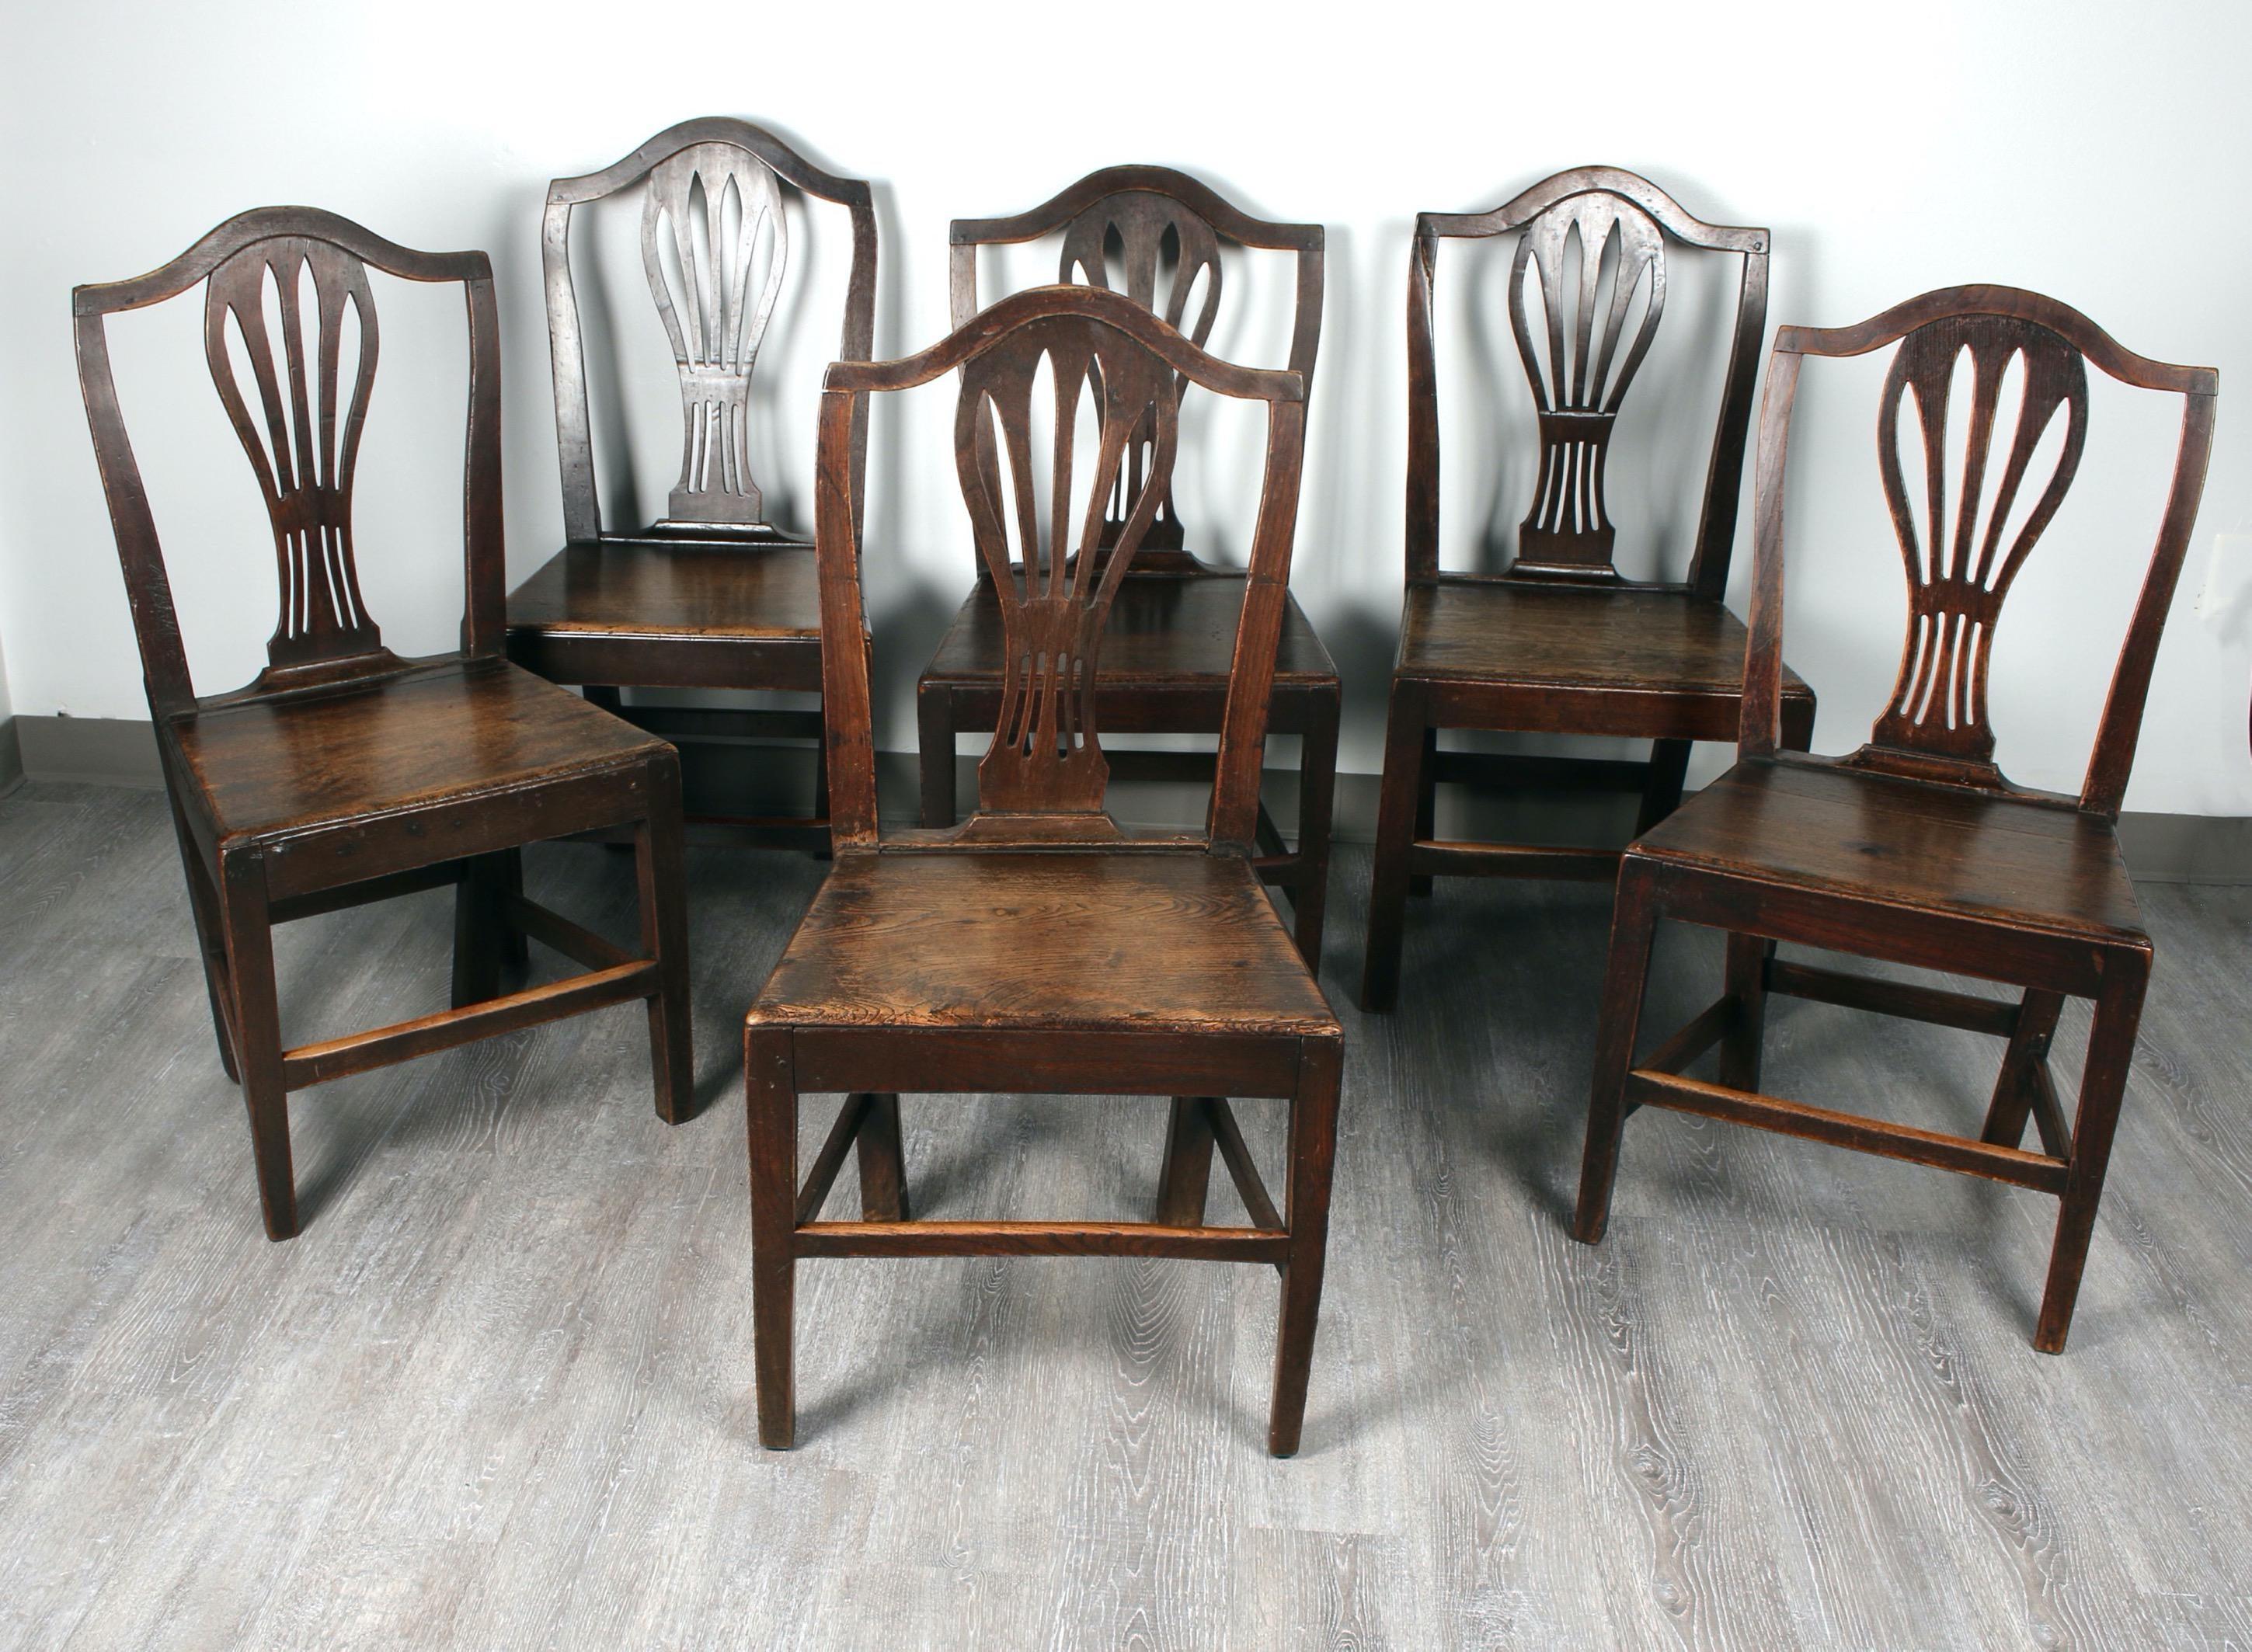 Georgian Set of English Country Chairs